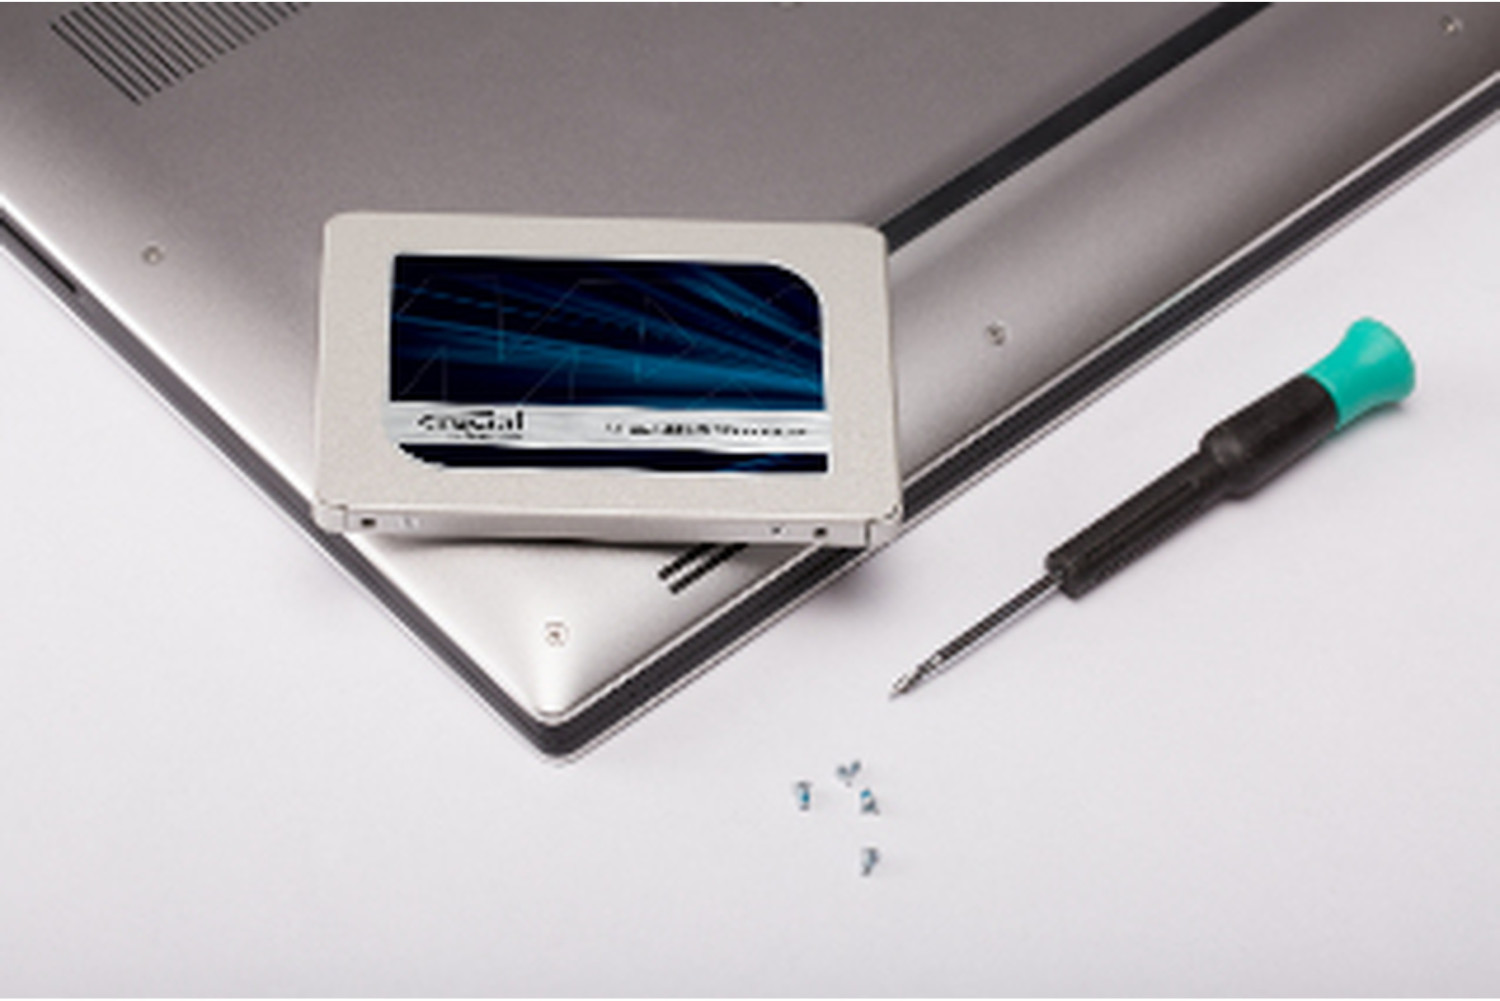 Crucial MX500 1To 3D NAND SATA 2,5 pouces SSD interne - Jusqu'à 560 Mo/s -  CT1000MX500SSD1